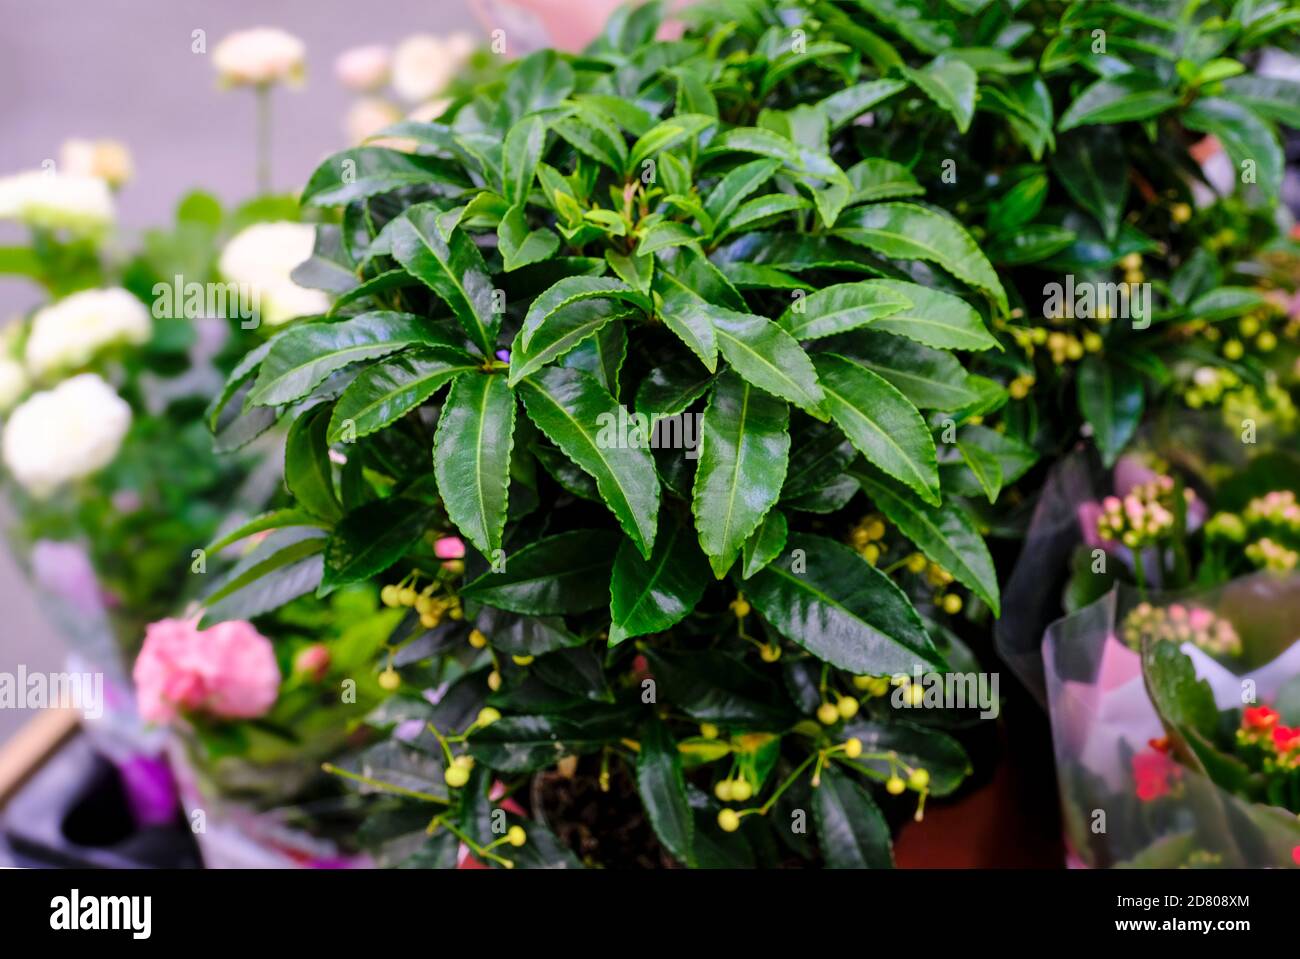 green leafy ardisia crenata berry plant at floral market. Selective focus Stock Photo